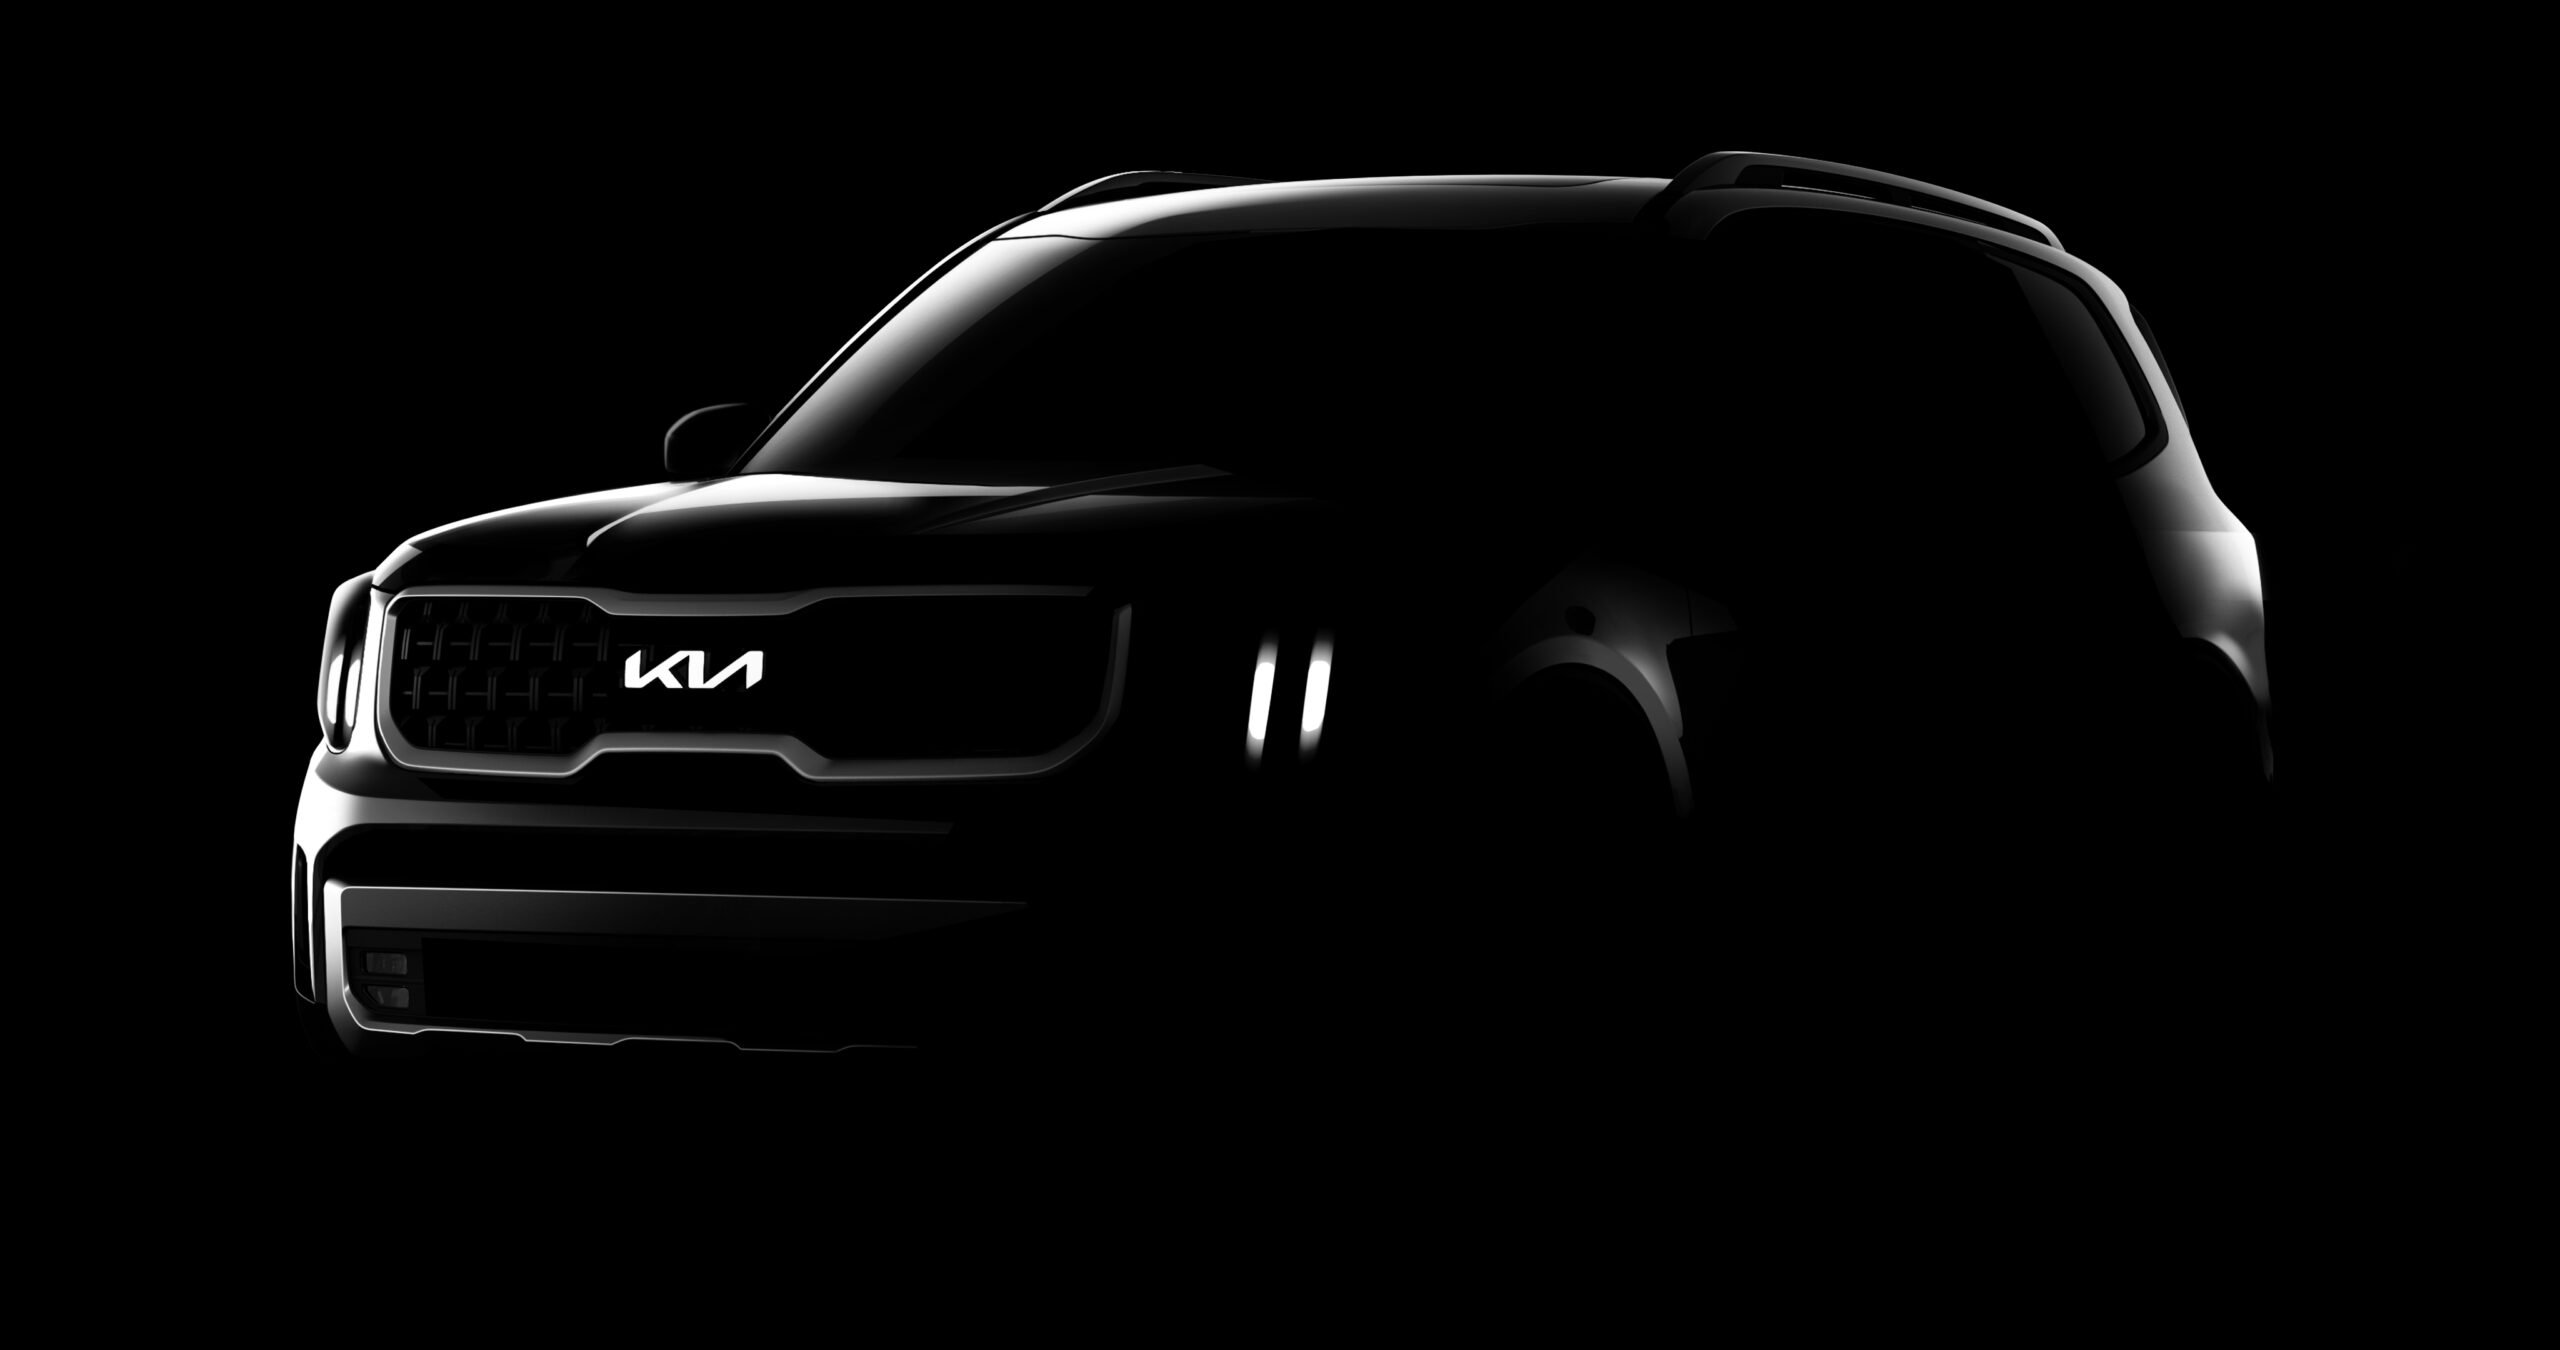 The teaser image of KIA's new Telluride SUV